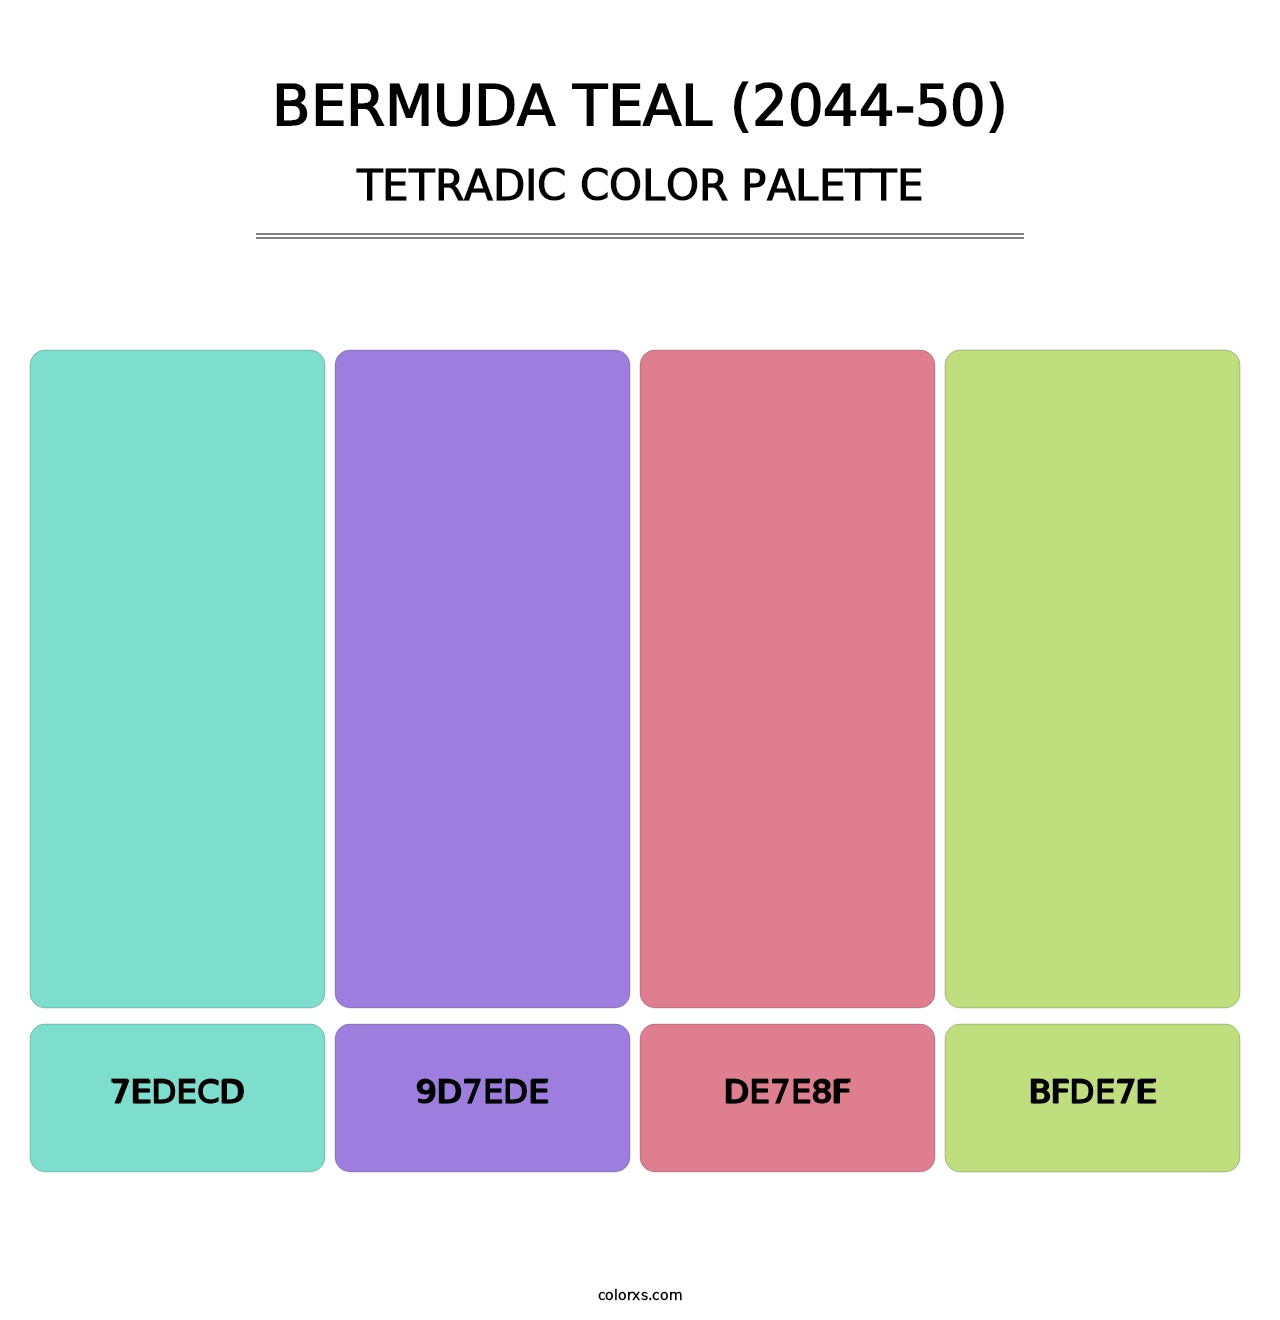 Bermuda Teal (2044-50) - Tetradic Color Palette